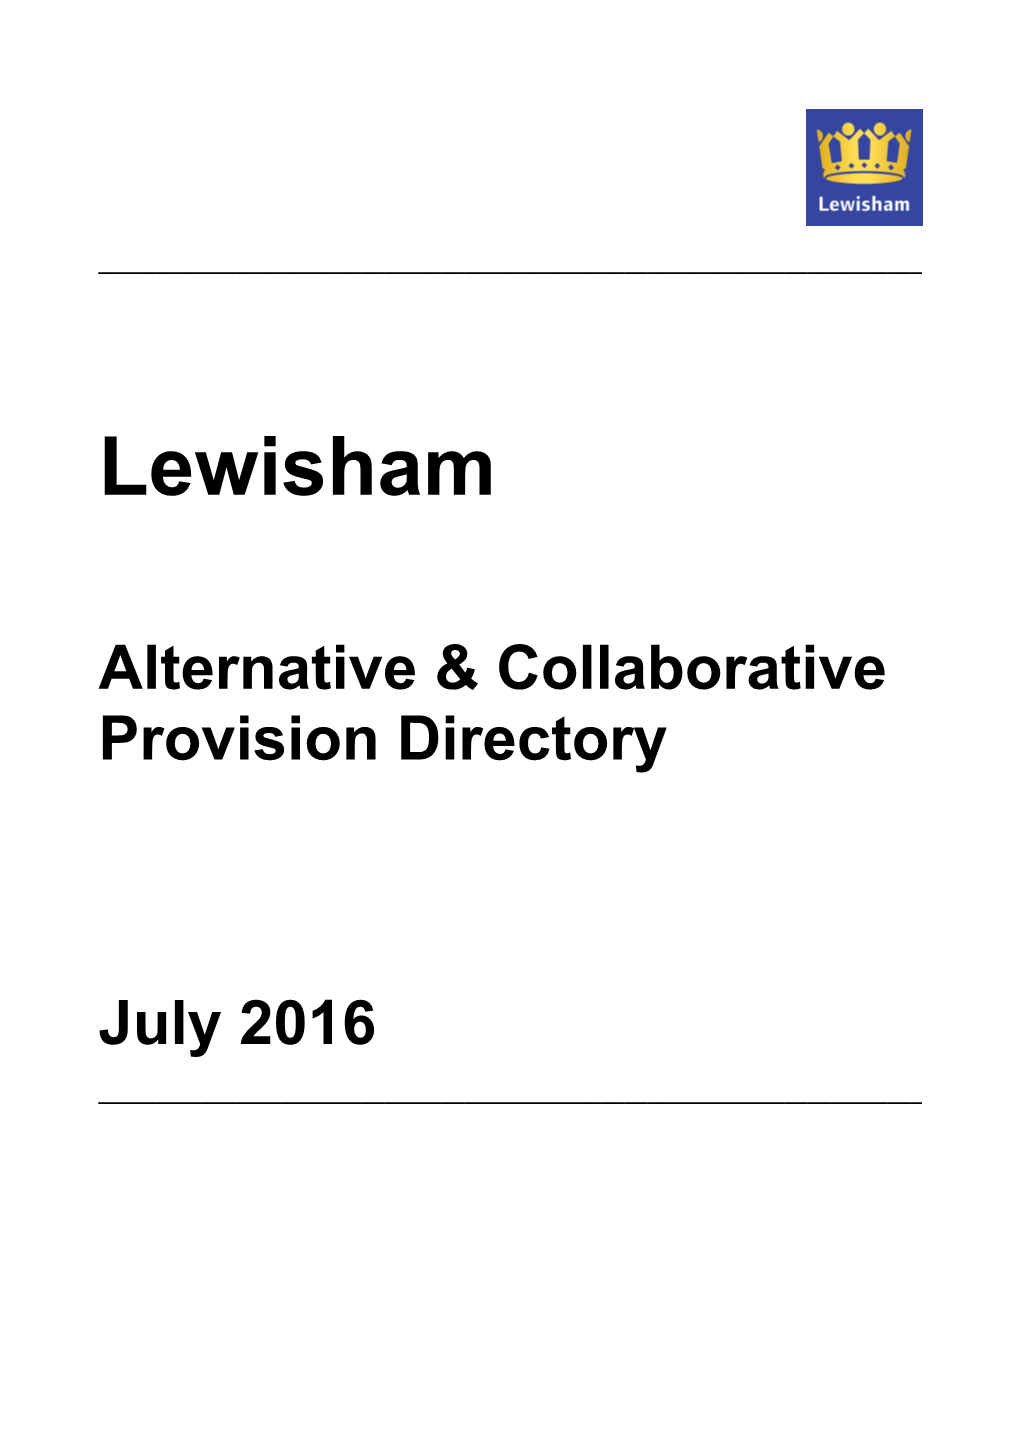 Lewisham Alternative Provisions Directory